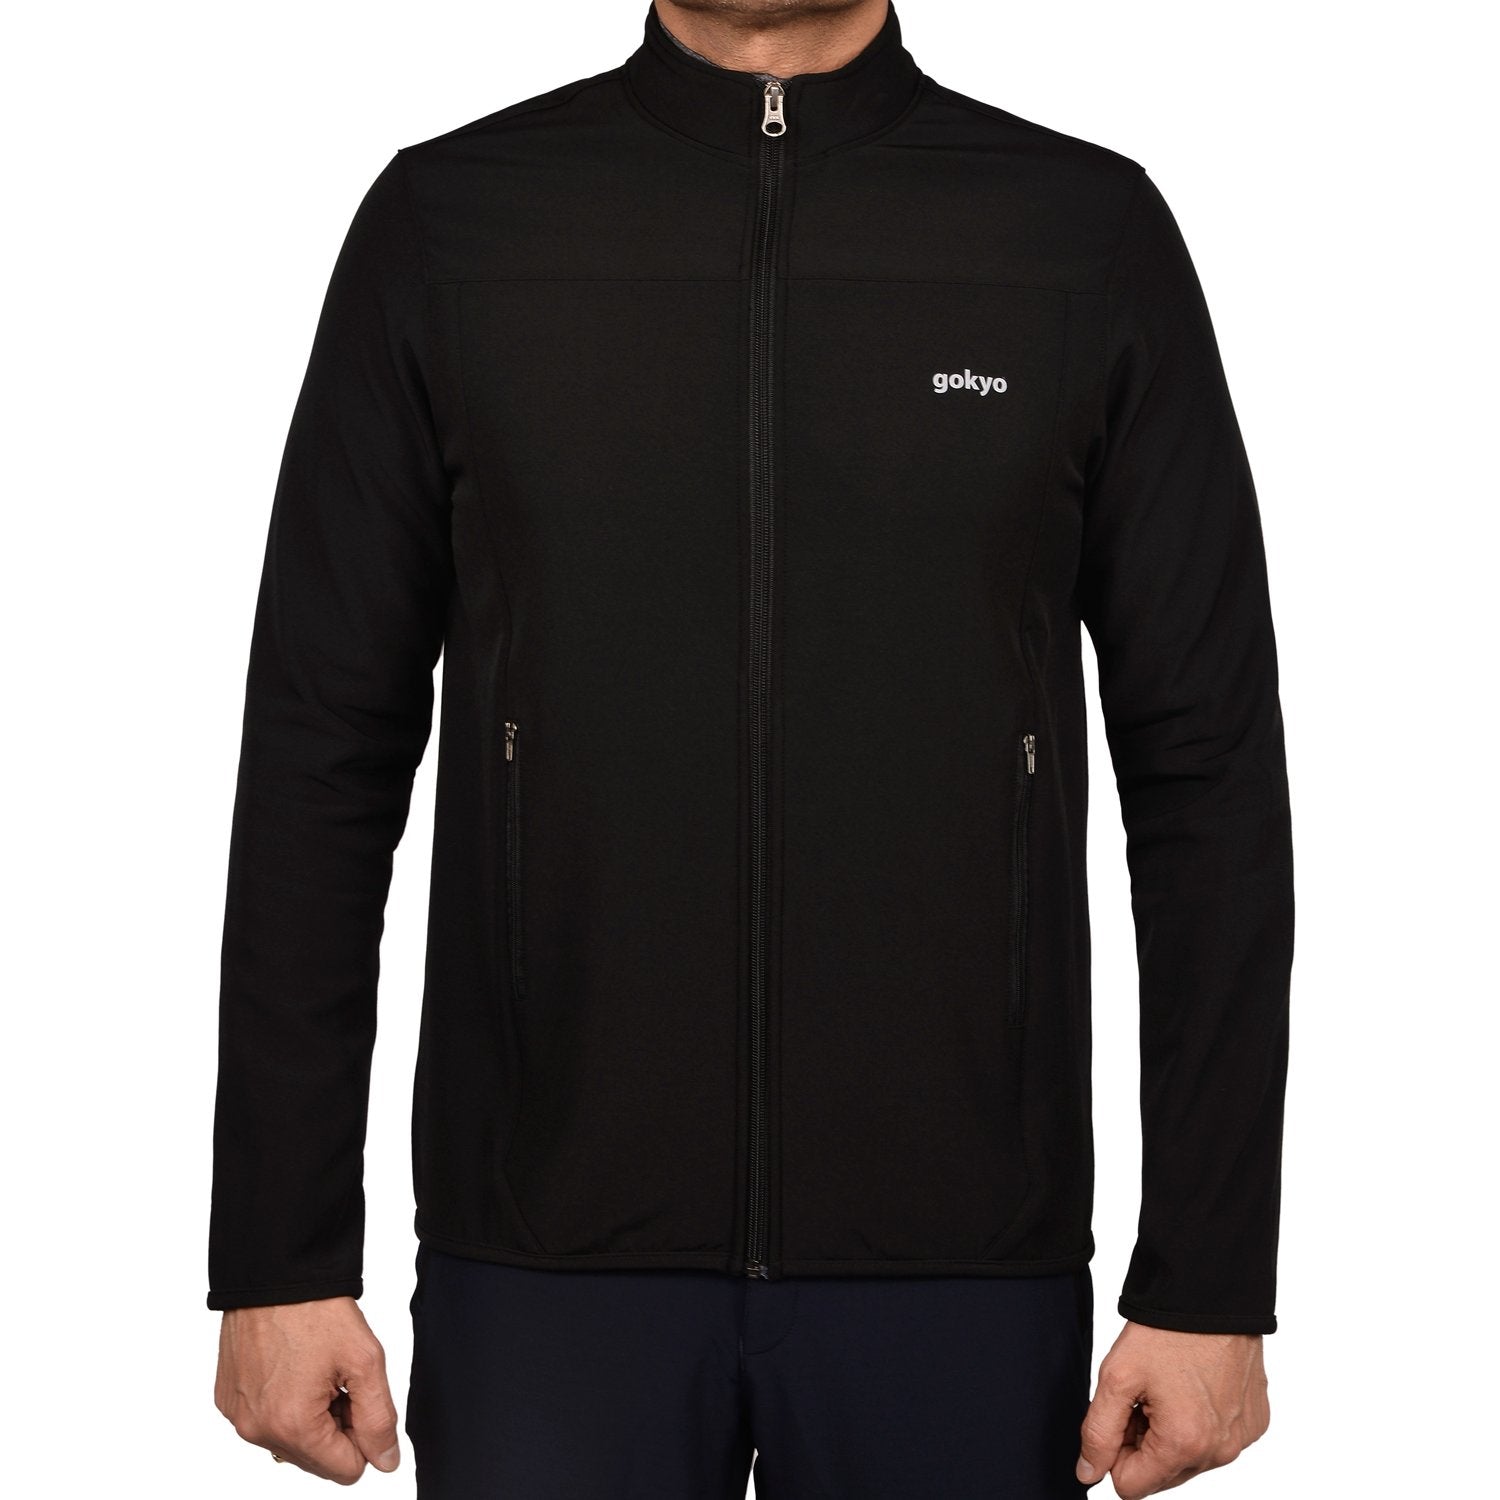 Buy Kaza Soft Shell Insulated Fleece Jacket Black at Gokyo Outdoor Clothing & Gear